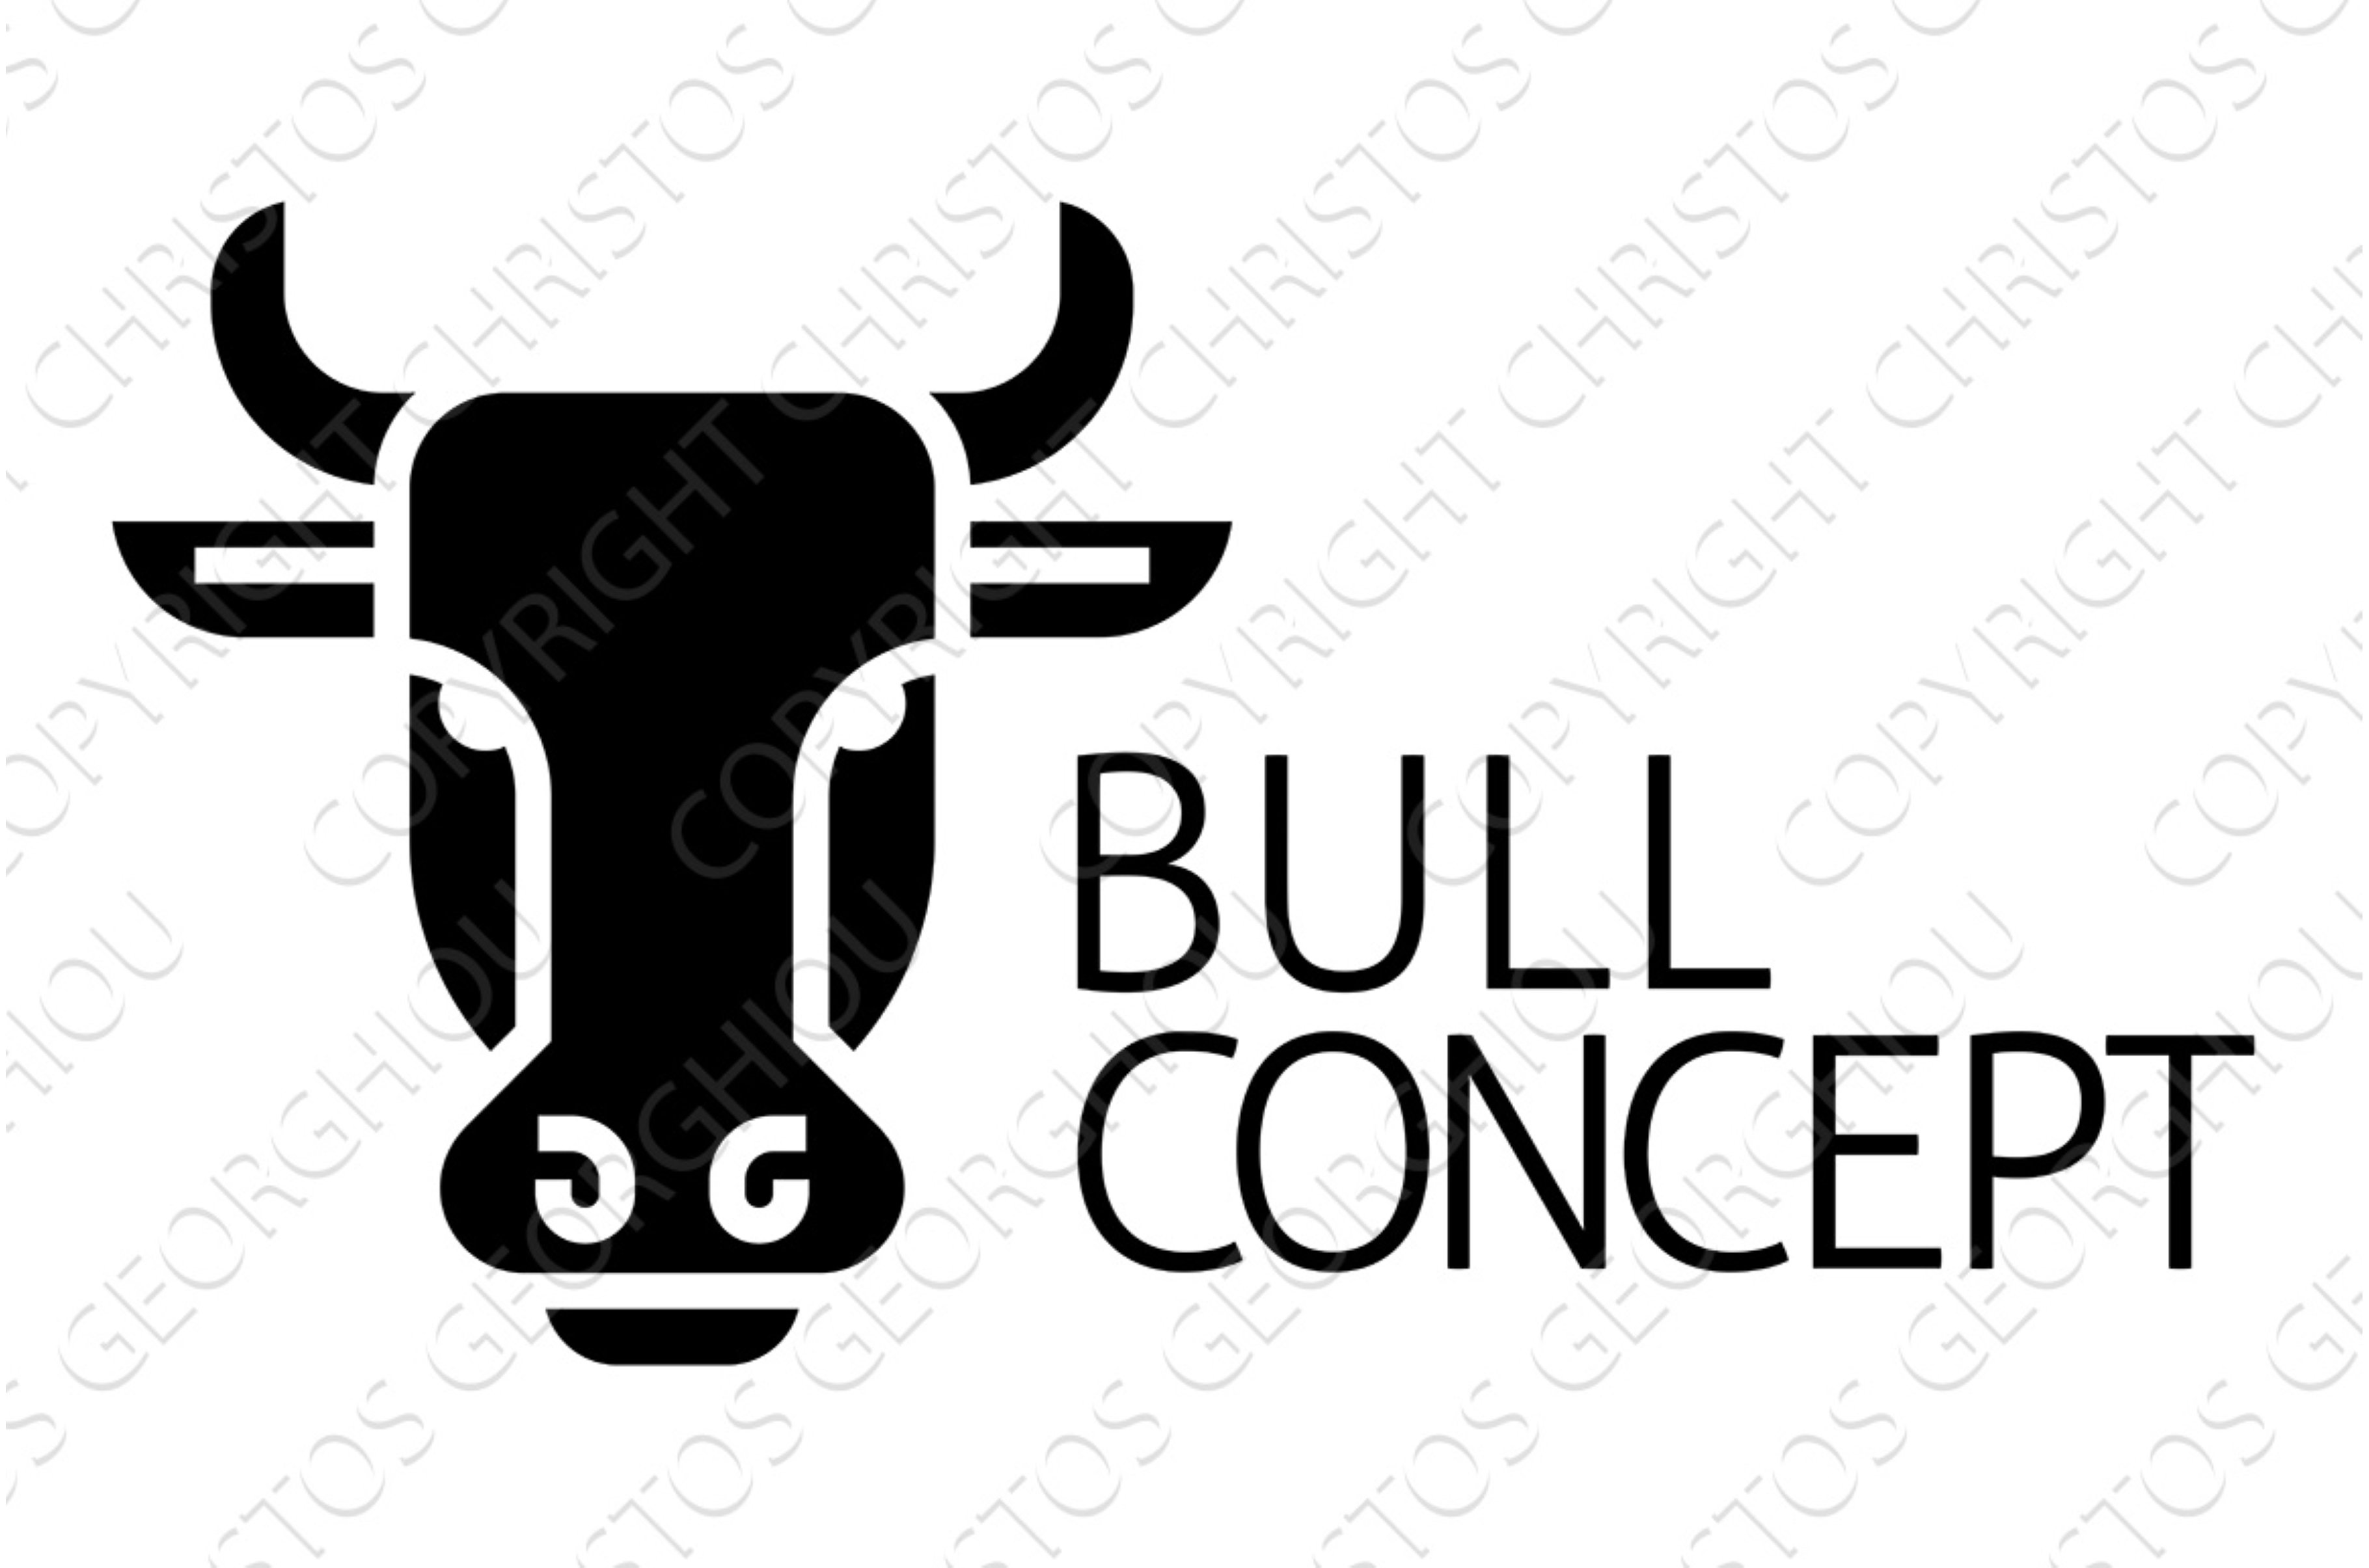 Bull Sign Label Icon Concept cover image.